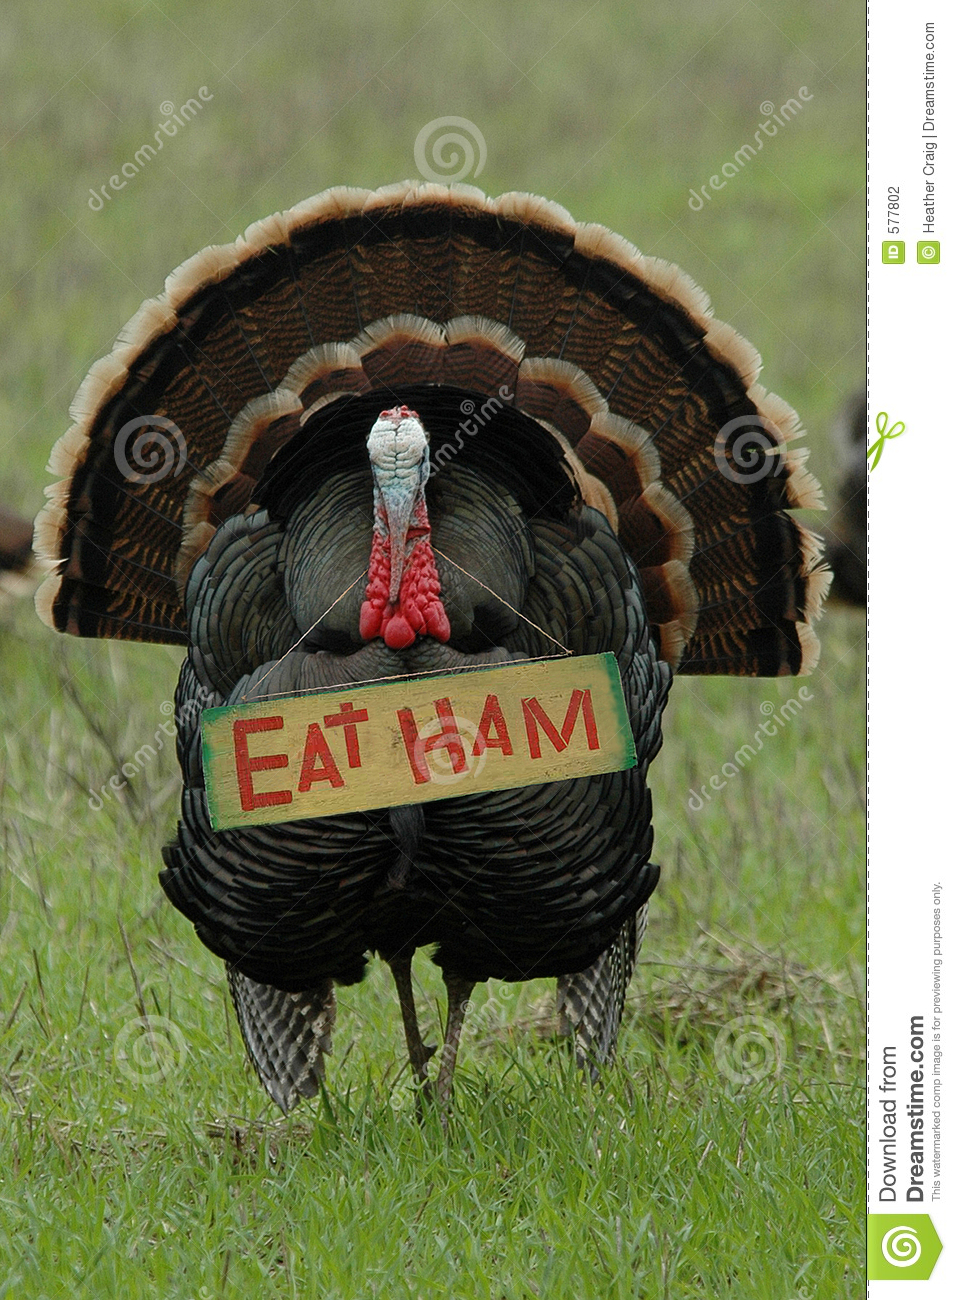 Thanksgiving Humor   Eat Ham  Turkey Stock Photography   Image  577802